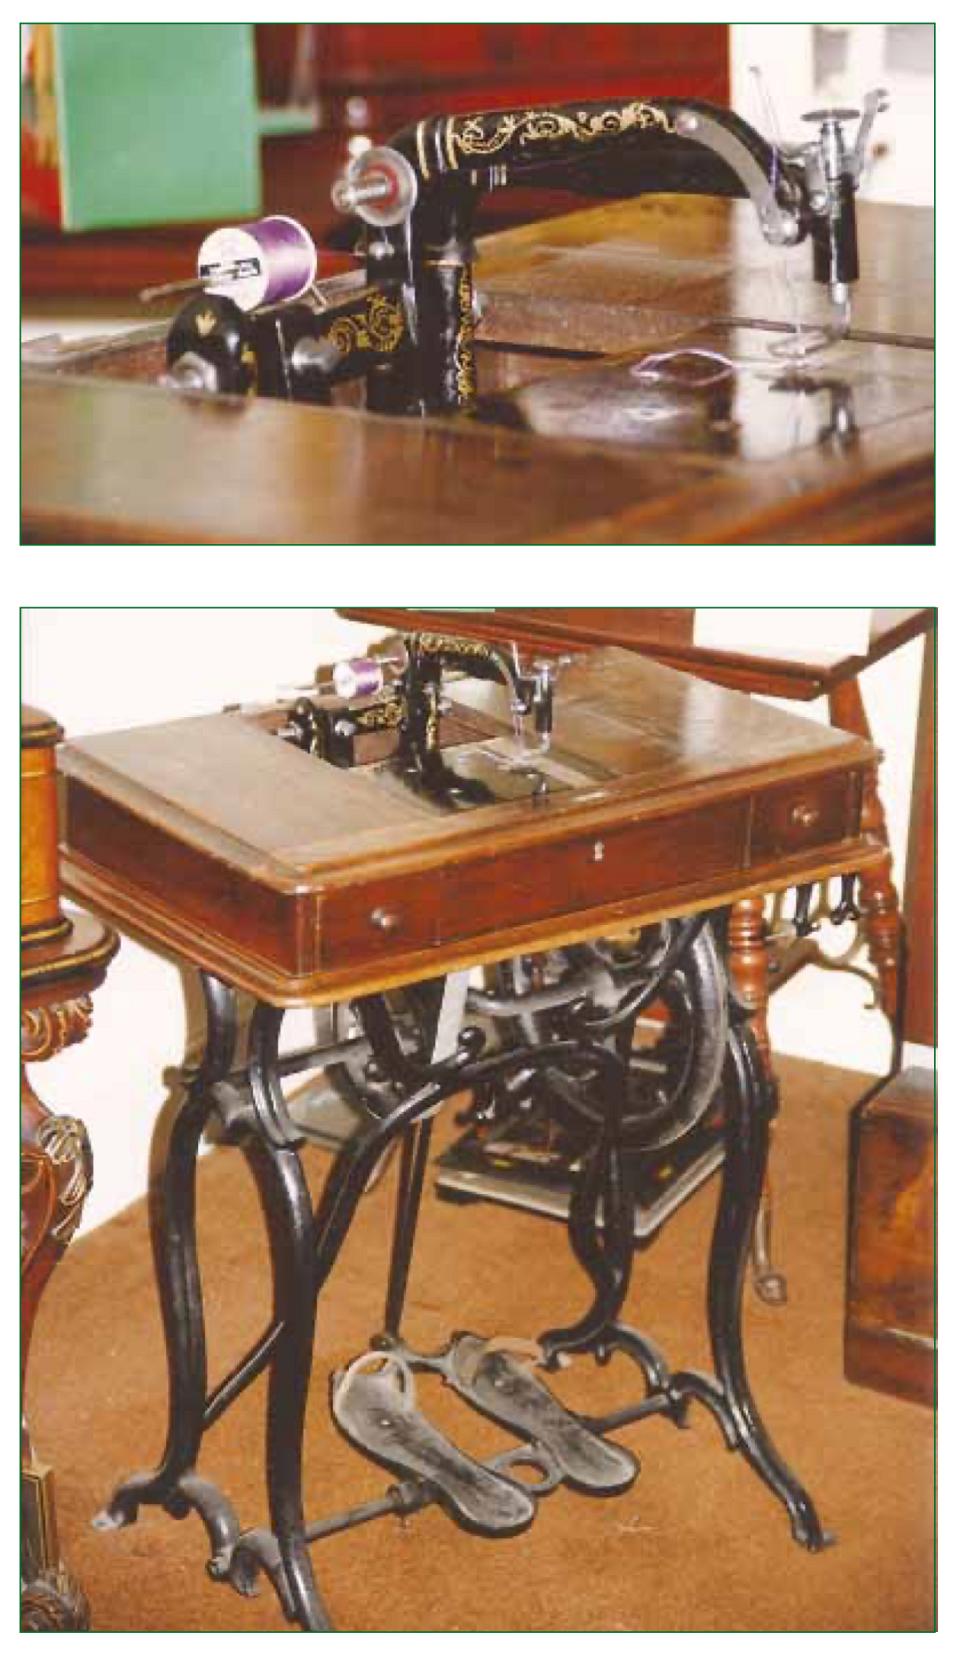 Wanzer's Family Shuttle Sewing Machine